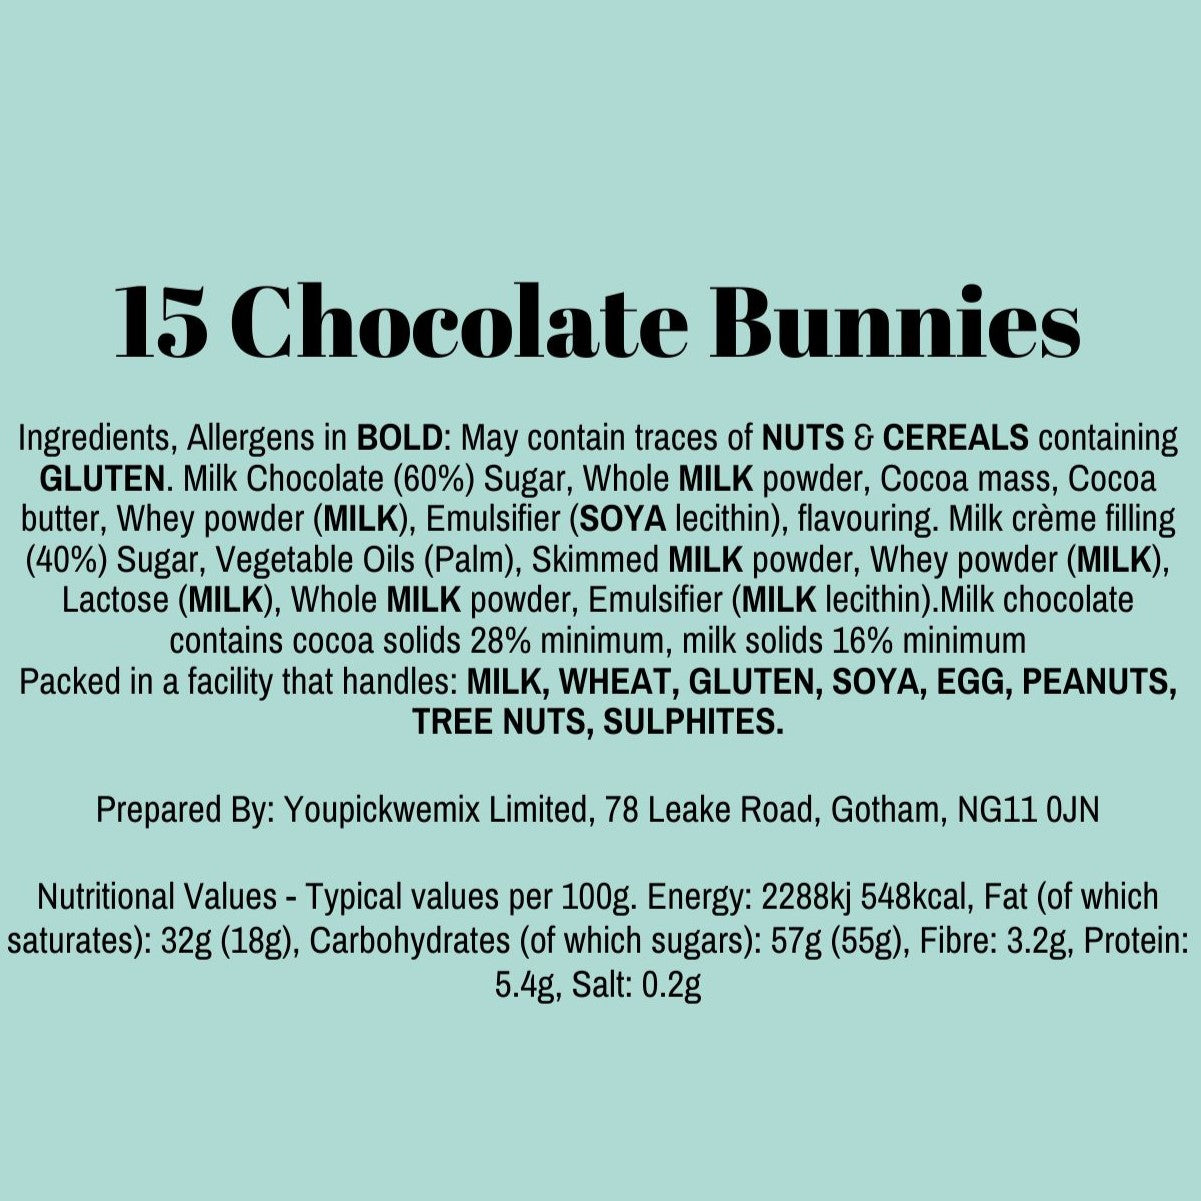 15 Chocolate Bunnies